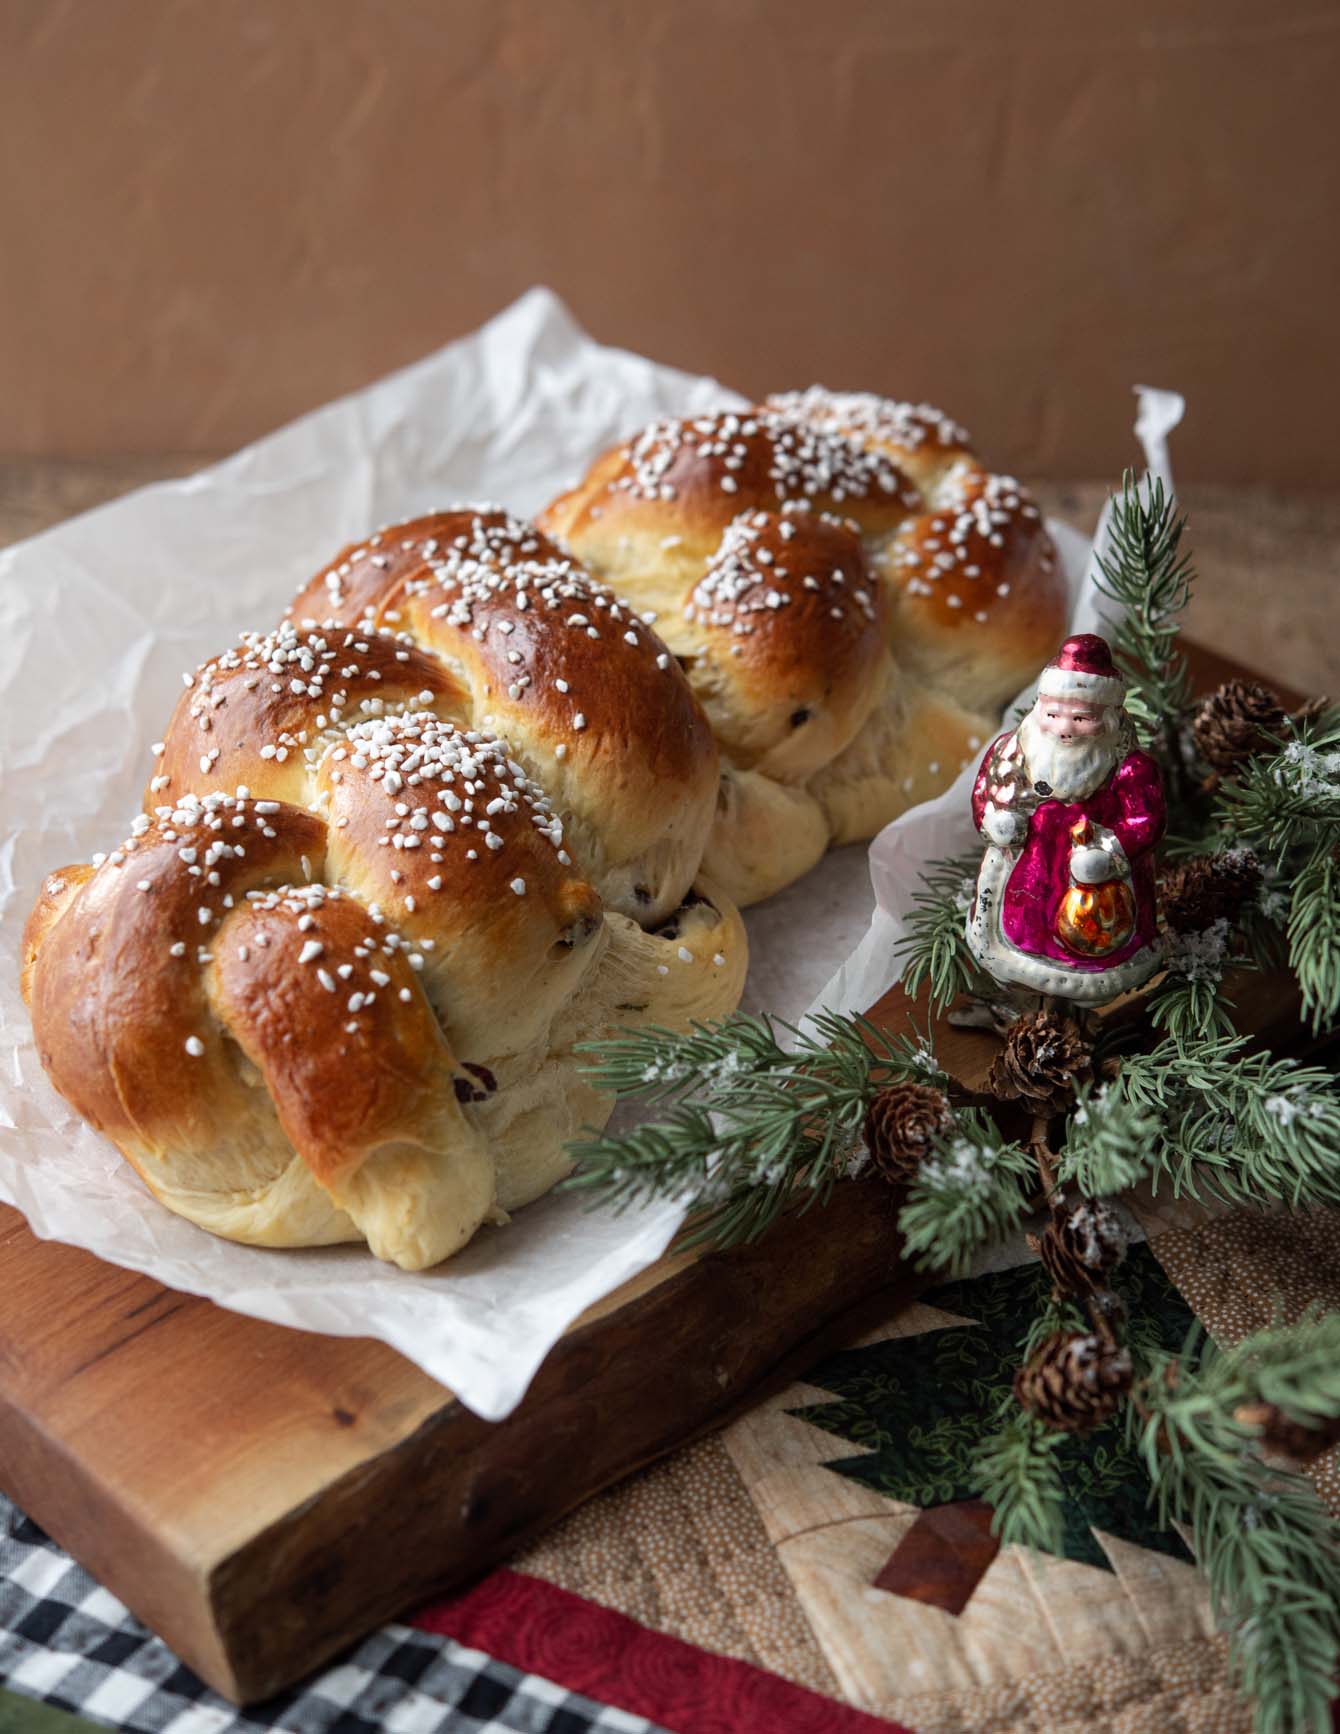 Braided Finnish cardamom bread (Pulla) next to Christmas ornaments.